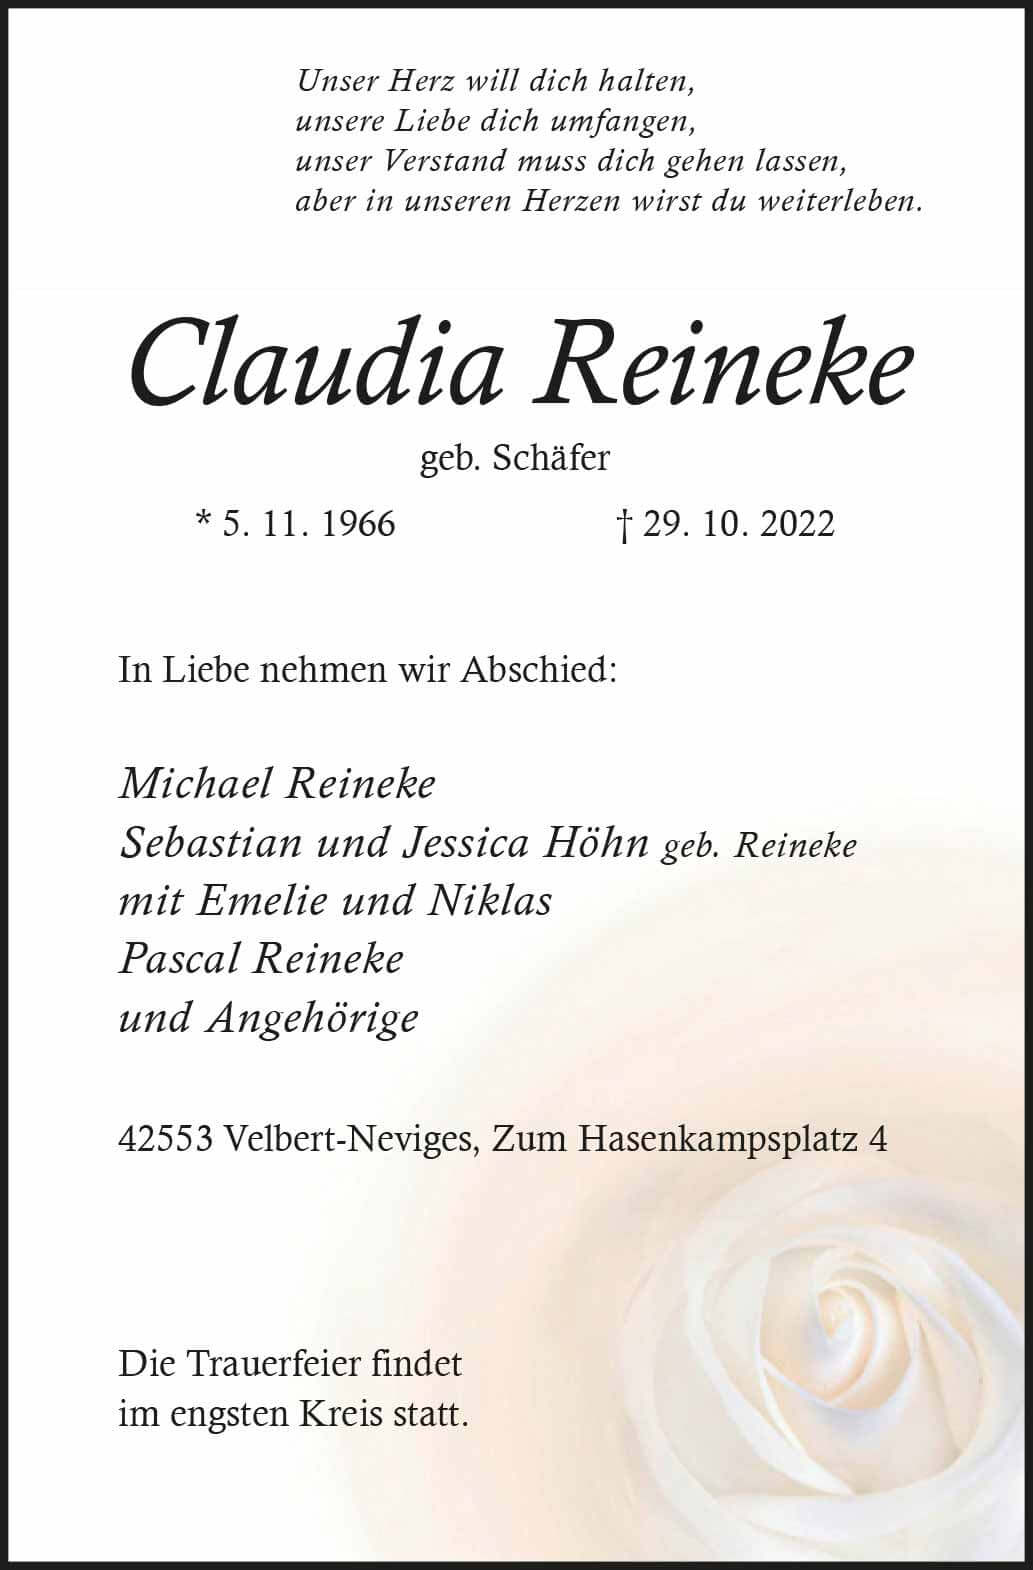 Claudia Reineke † 29. 10. 2022